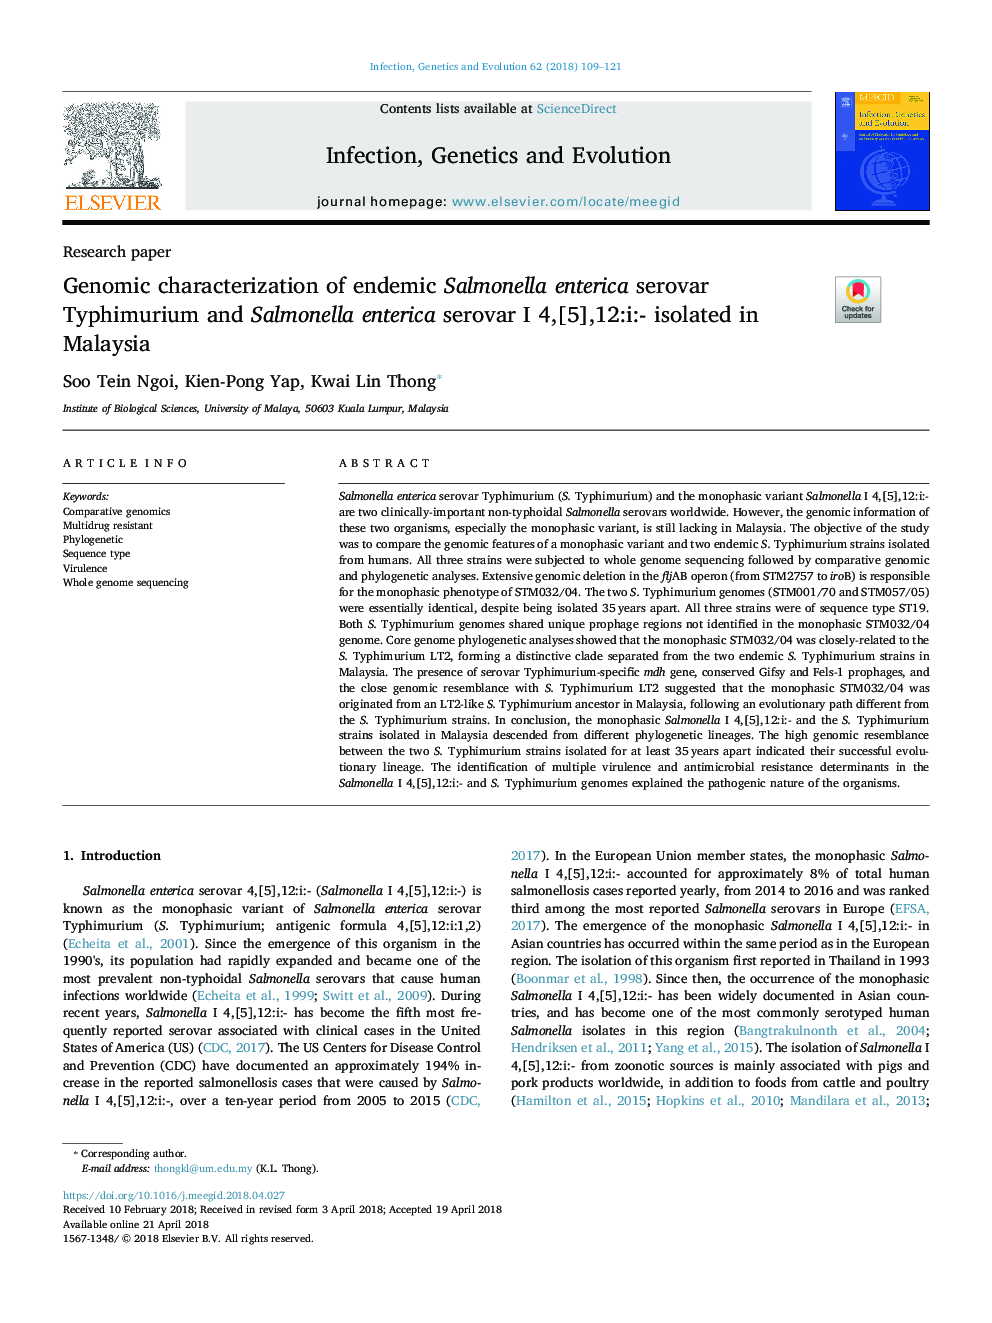 Genomic characterization of endemic Salmonella enterica serovar Typhimurium and Salmonella enterica serovar I 4,[5],12:i:- isolated in Malaysia